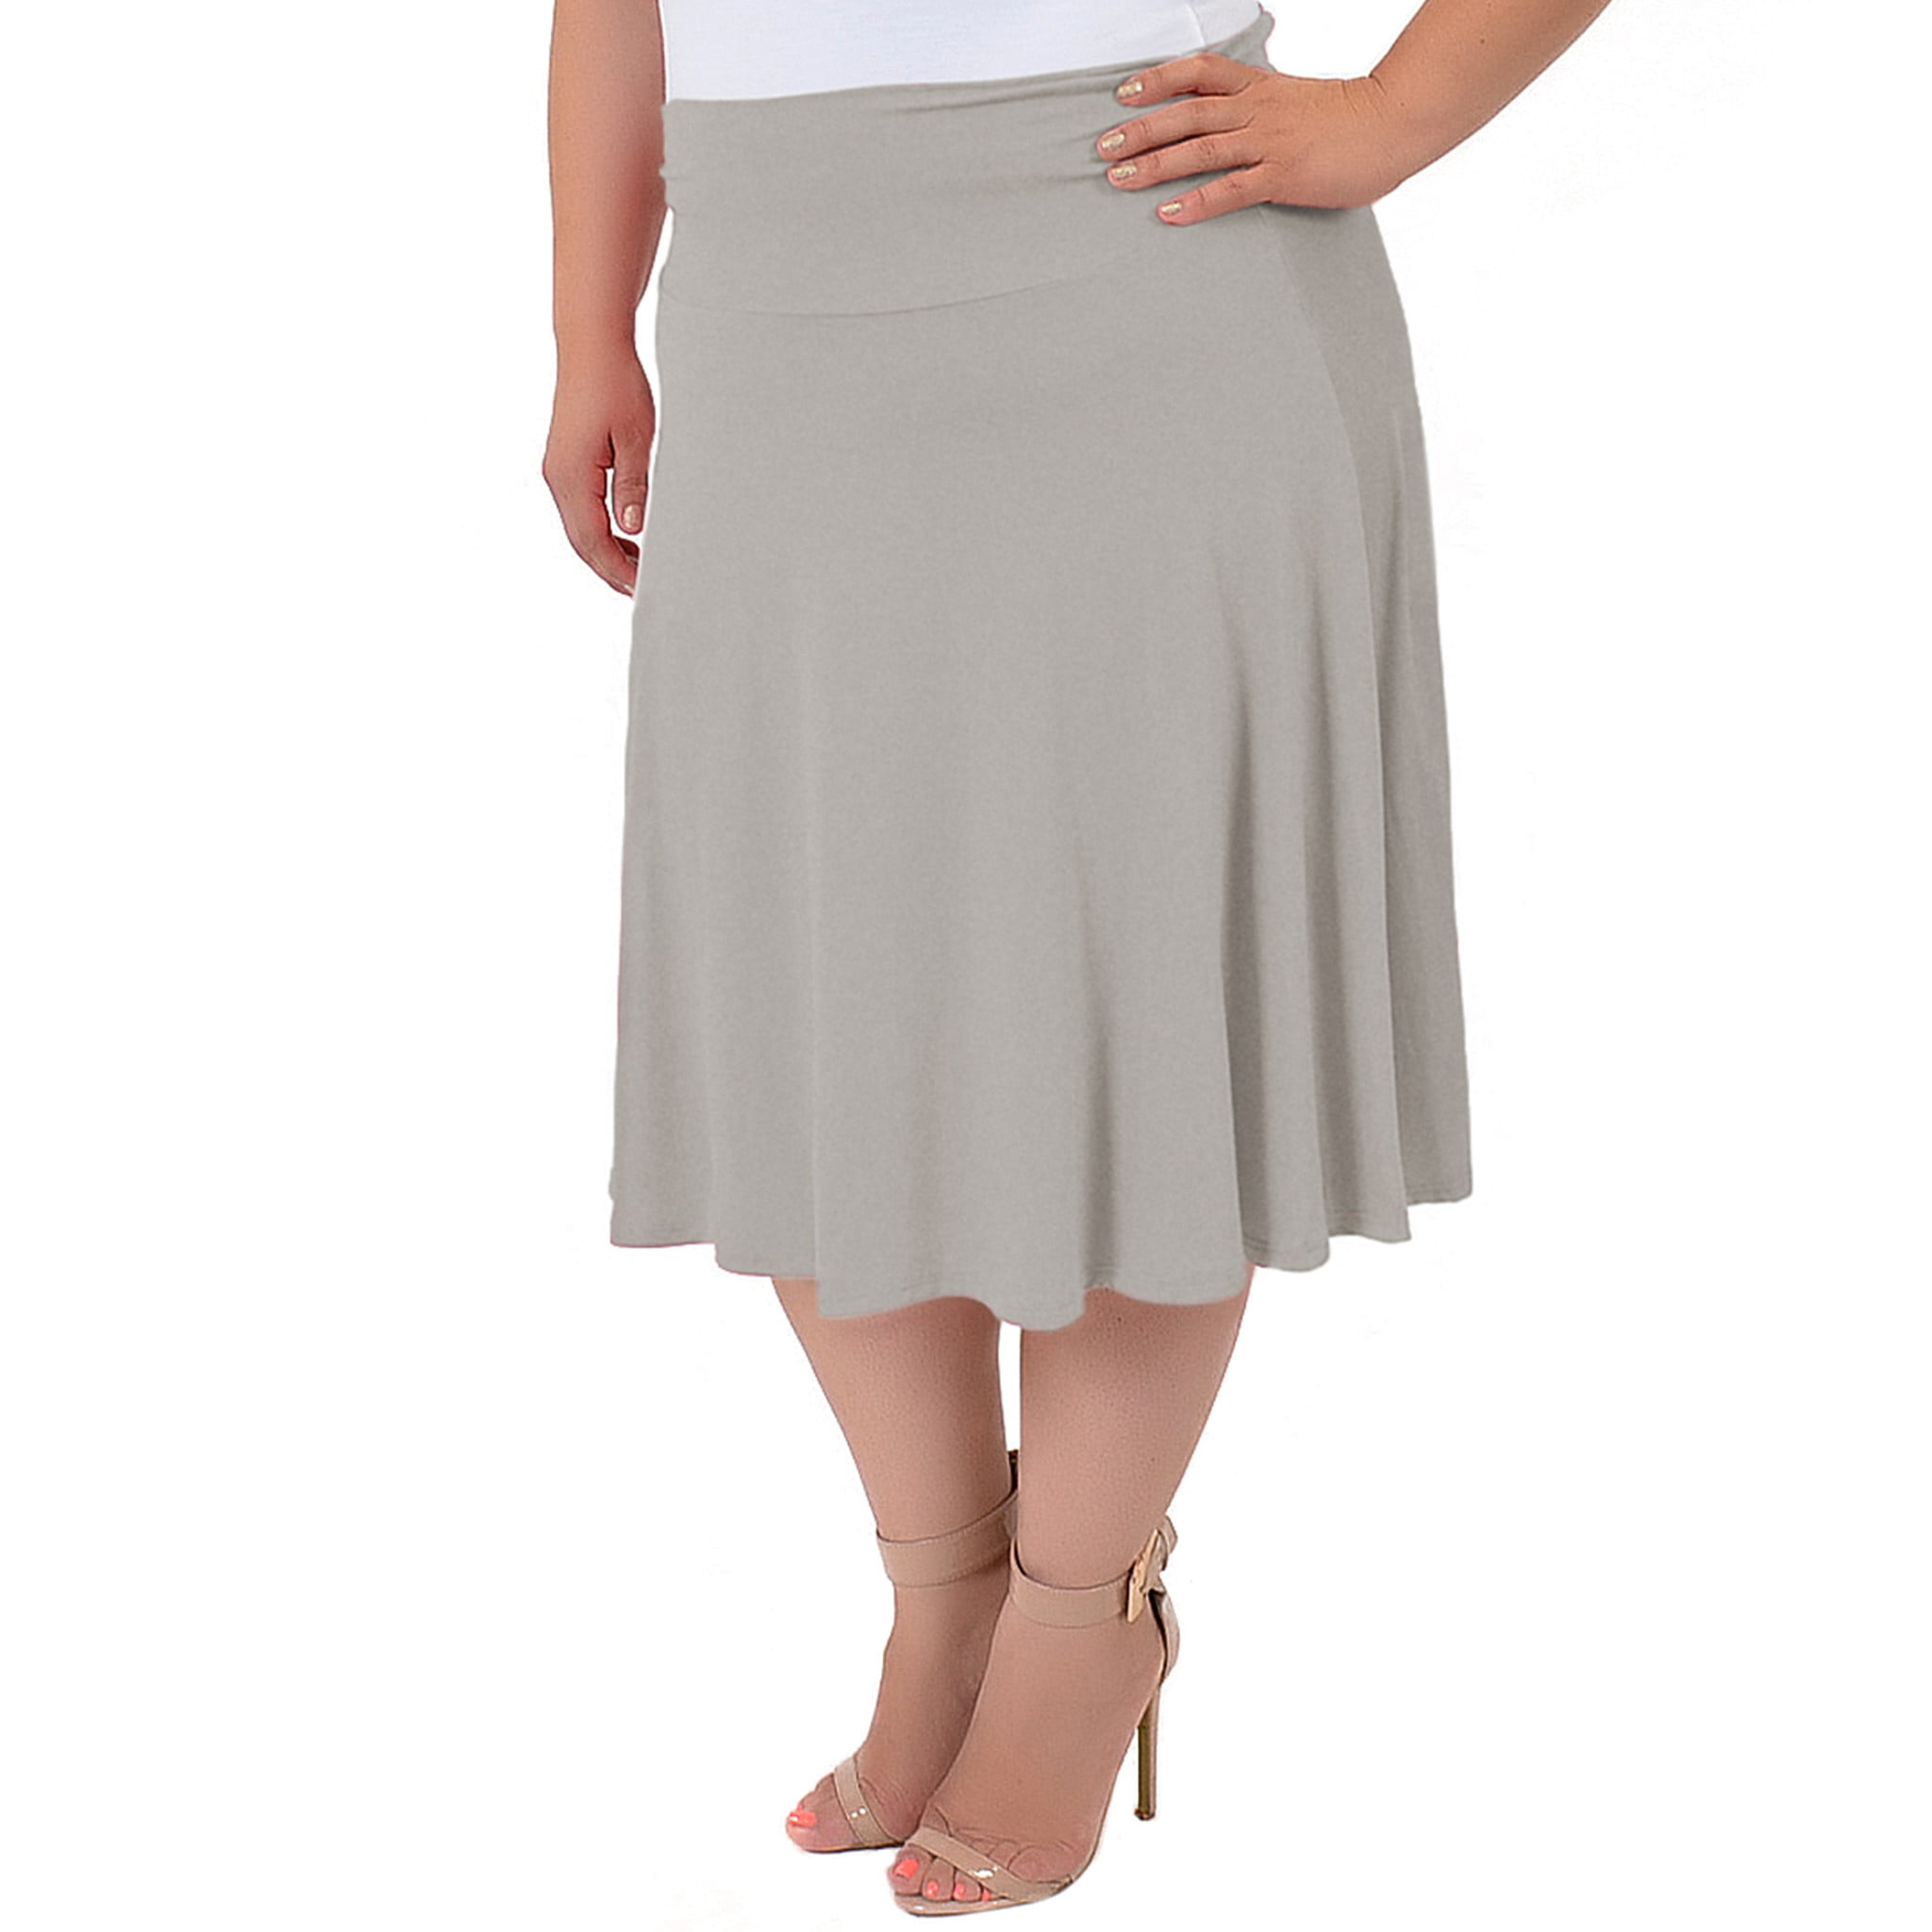 Plus Size Knee Length Flowy Skirt - X-Large (12-14) / Heather Gray ...